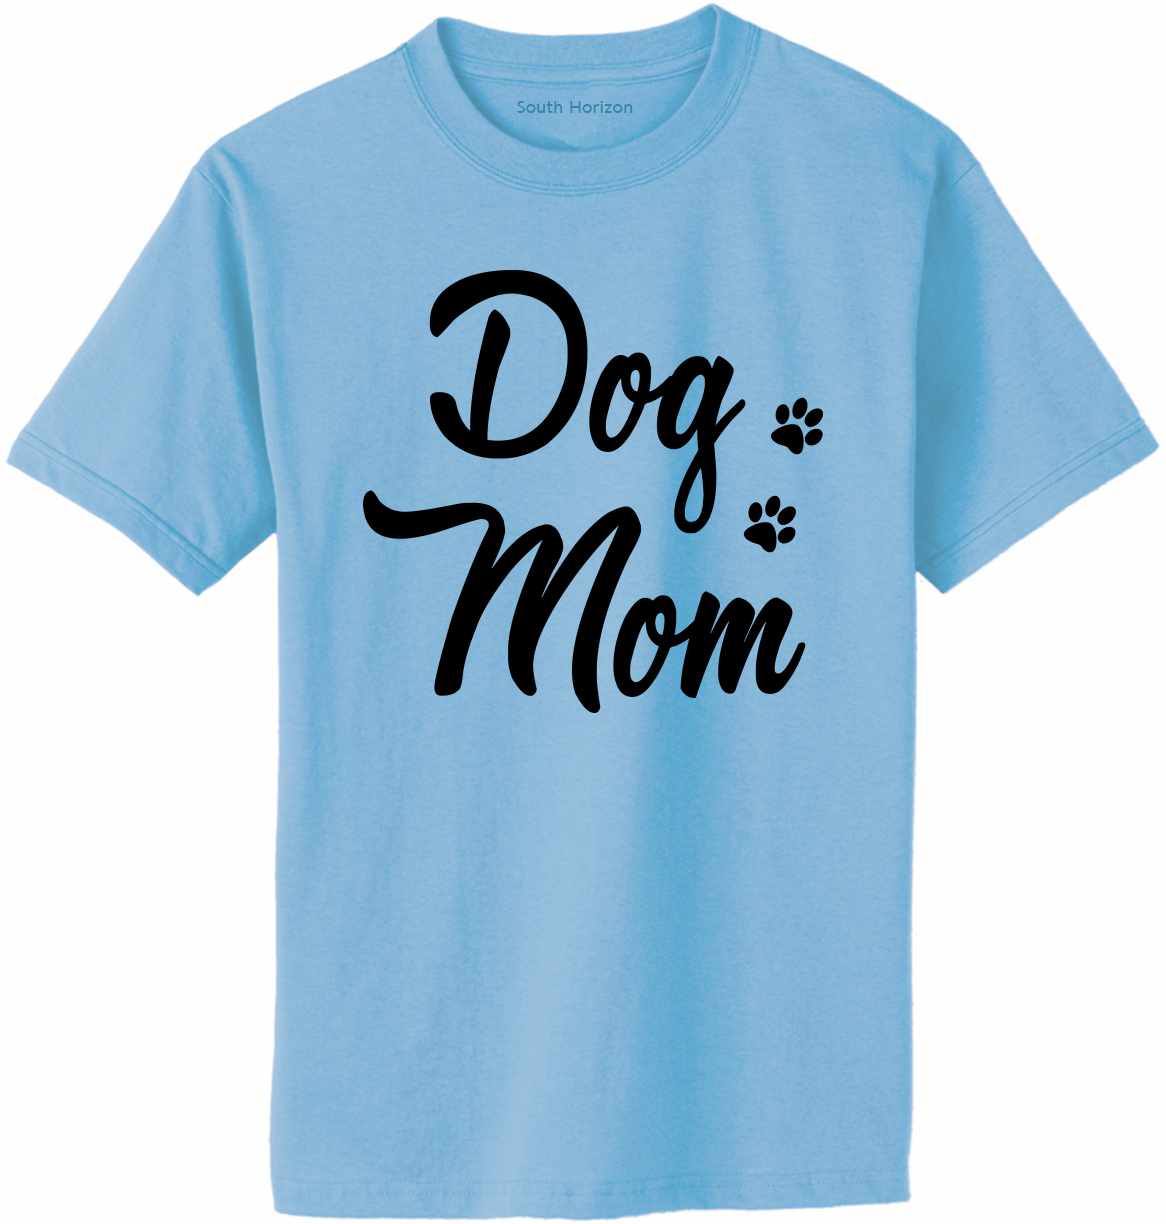 Dog Mom Adult T-Shirt